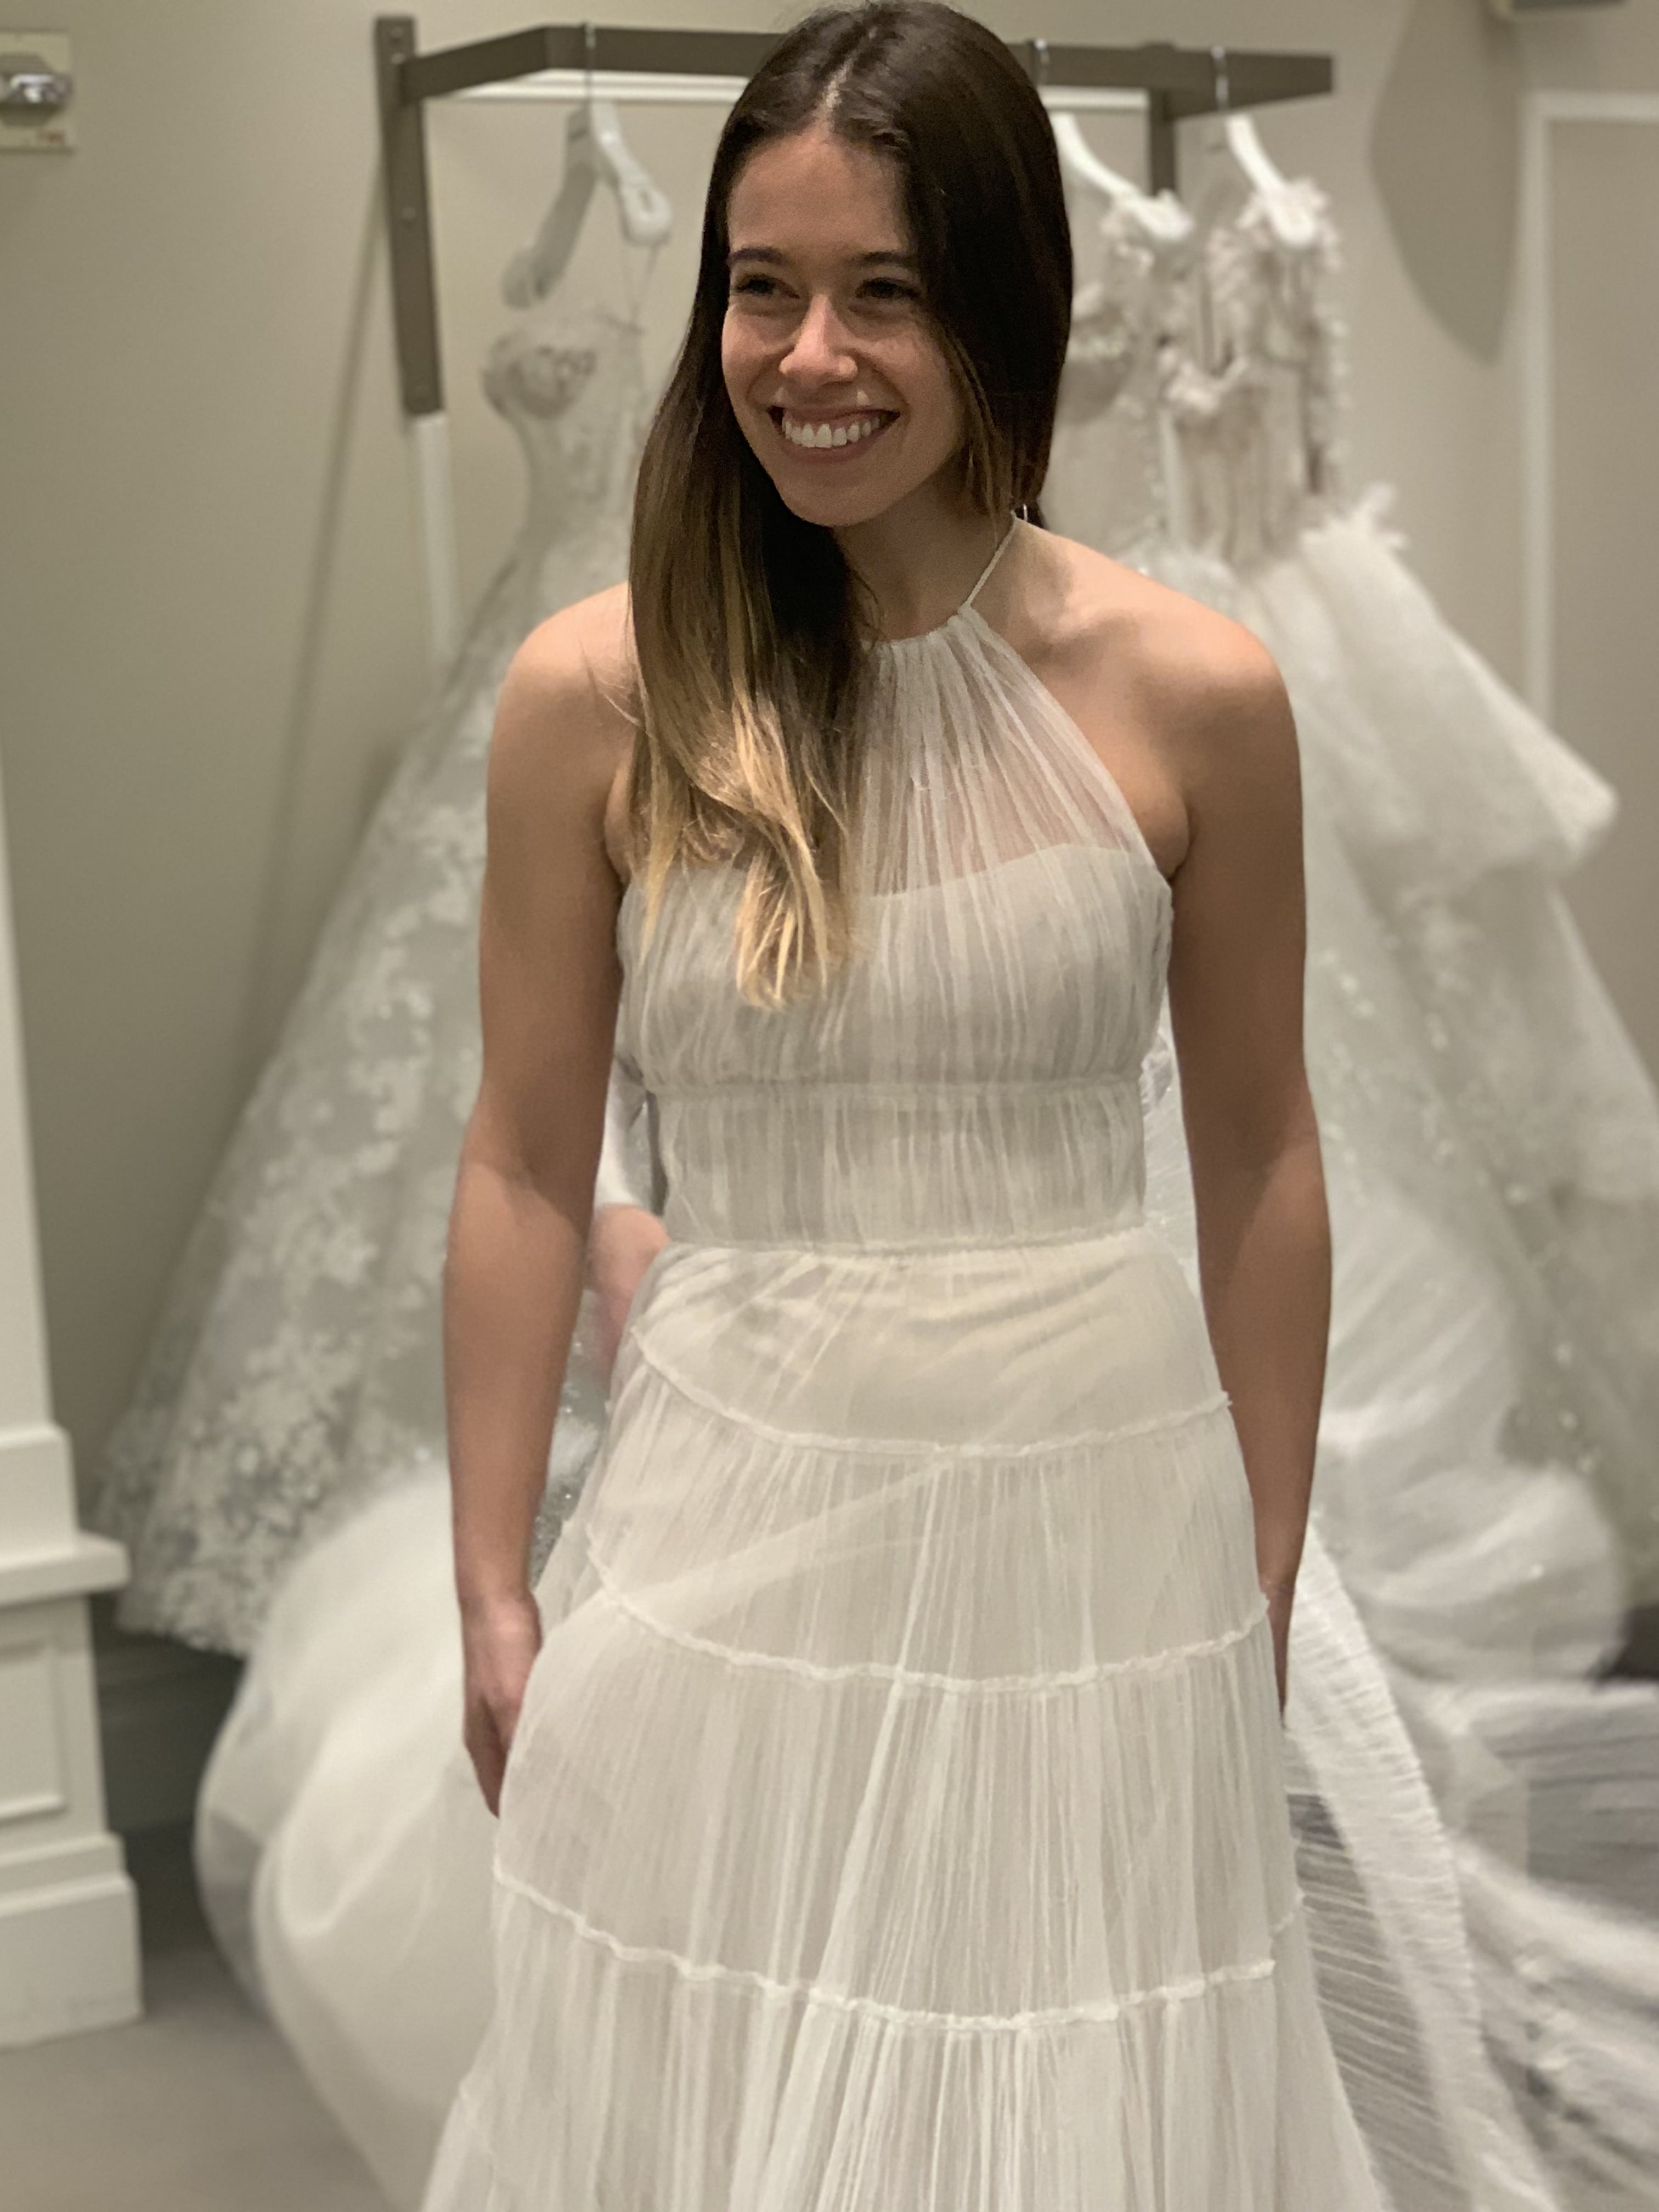 The Kleinfeld Bridal Wedding Dress Experience in New York | POPSUGAR Fashion